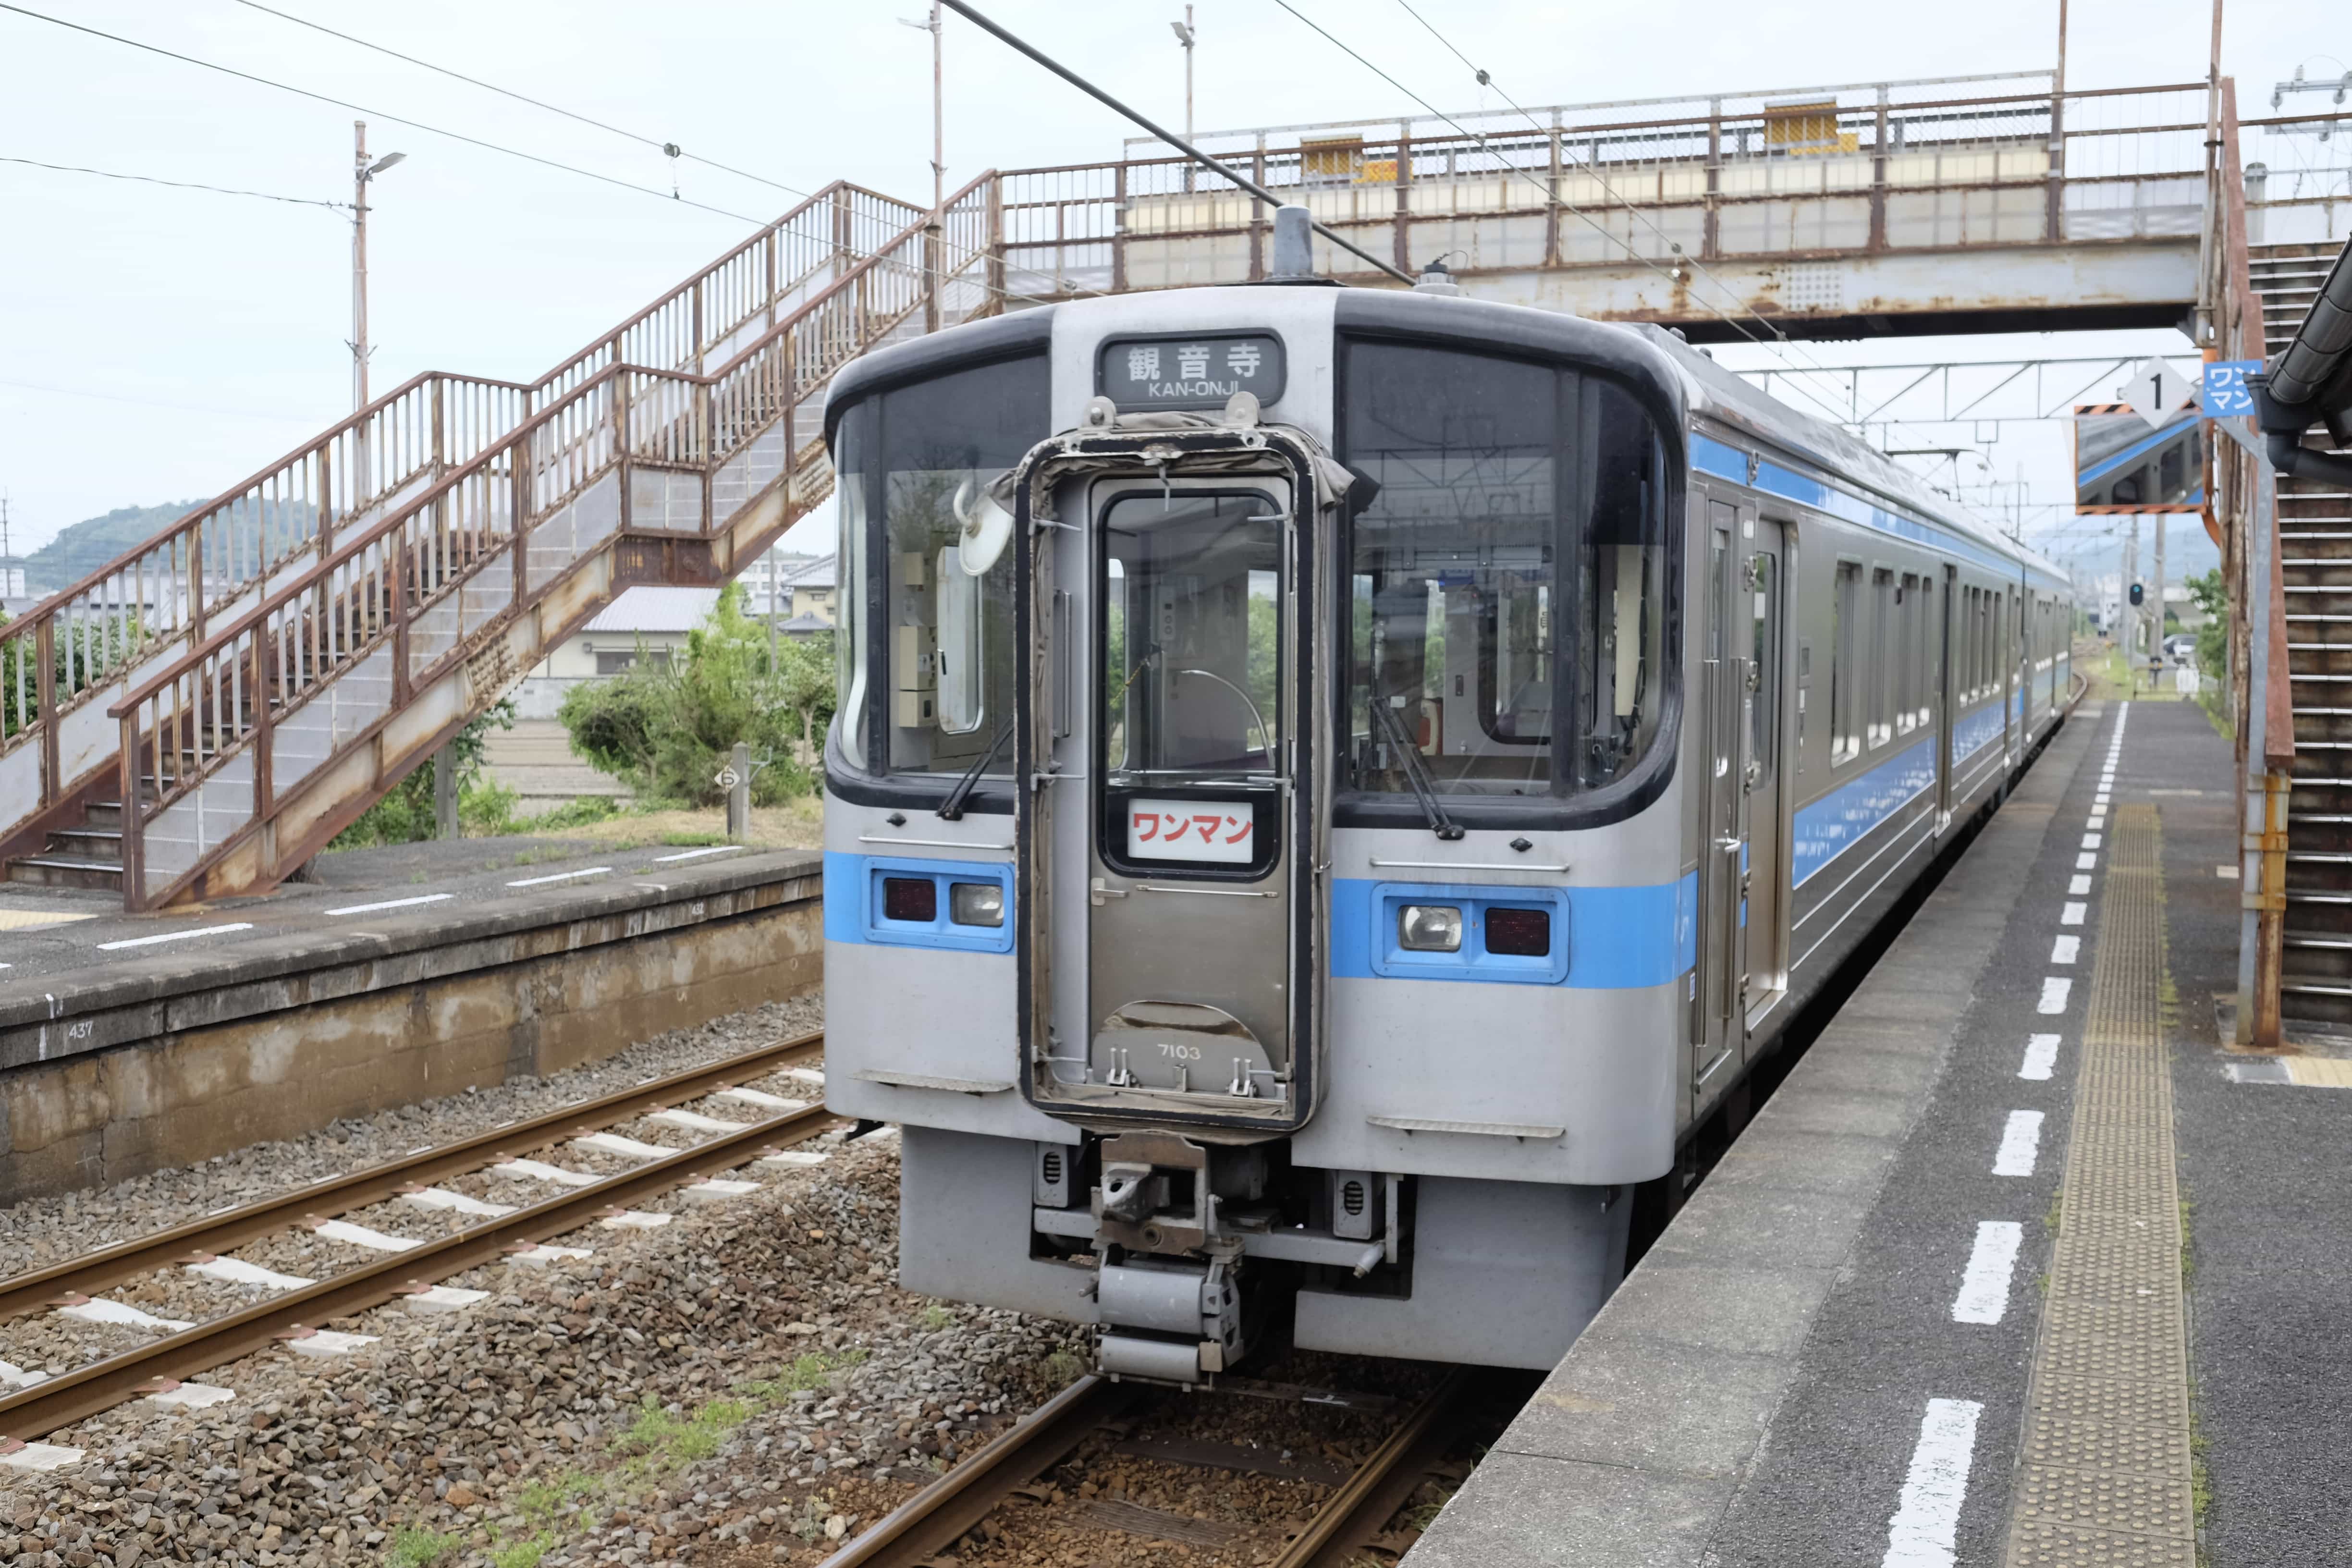 Iyo-Tomita Station